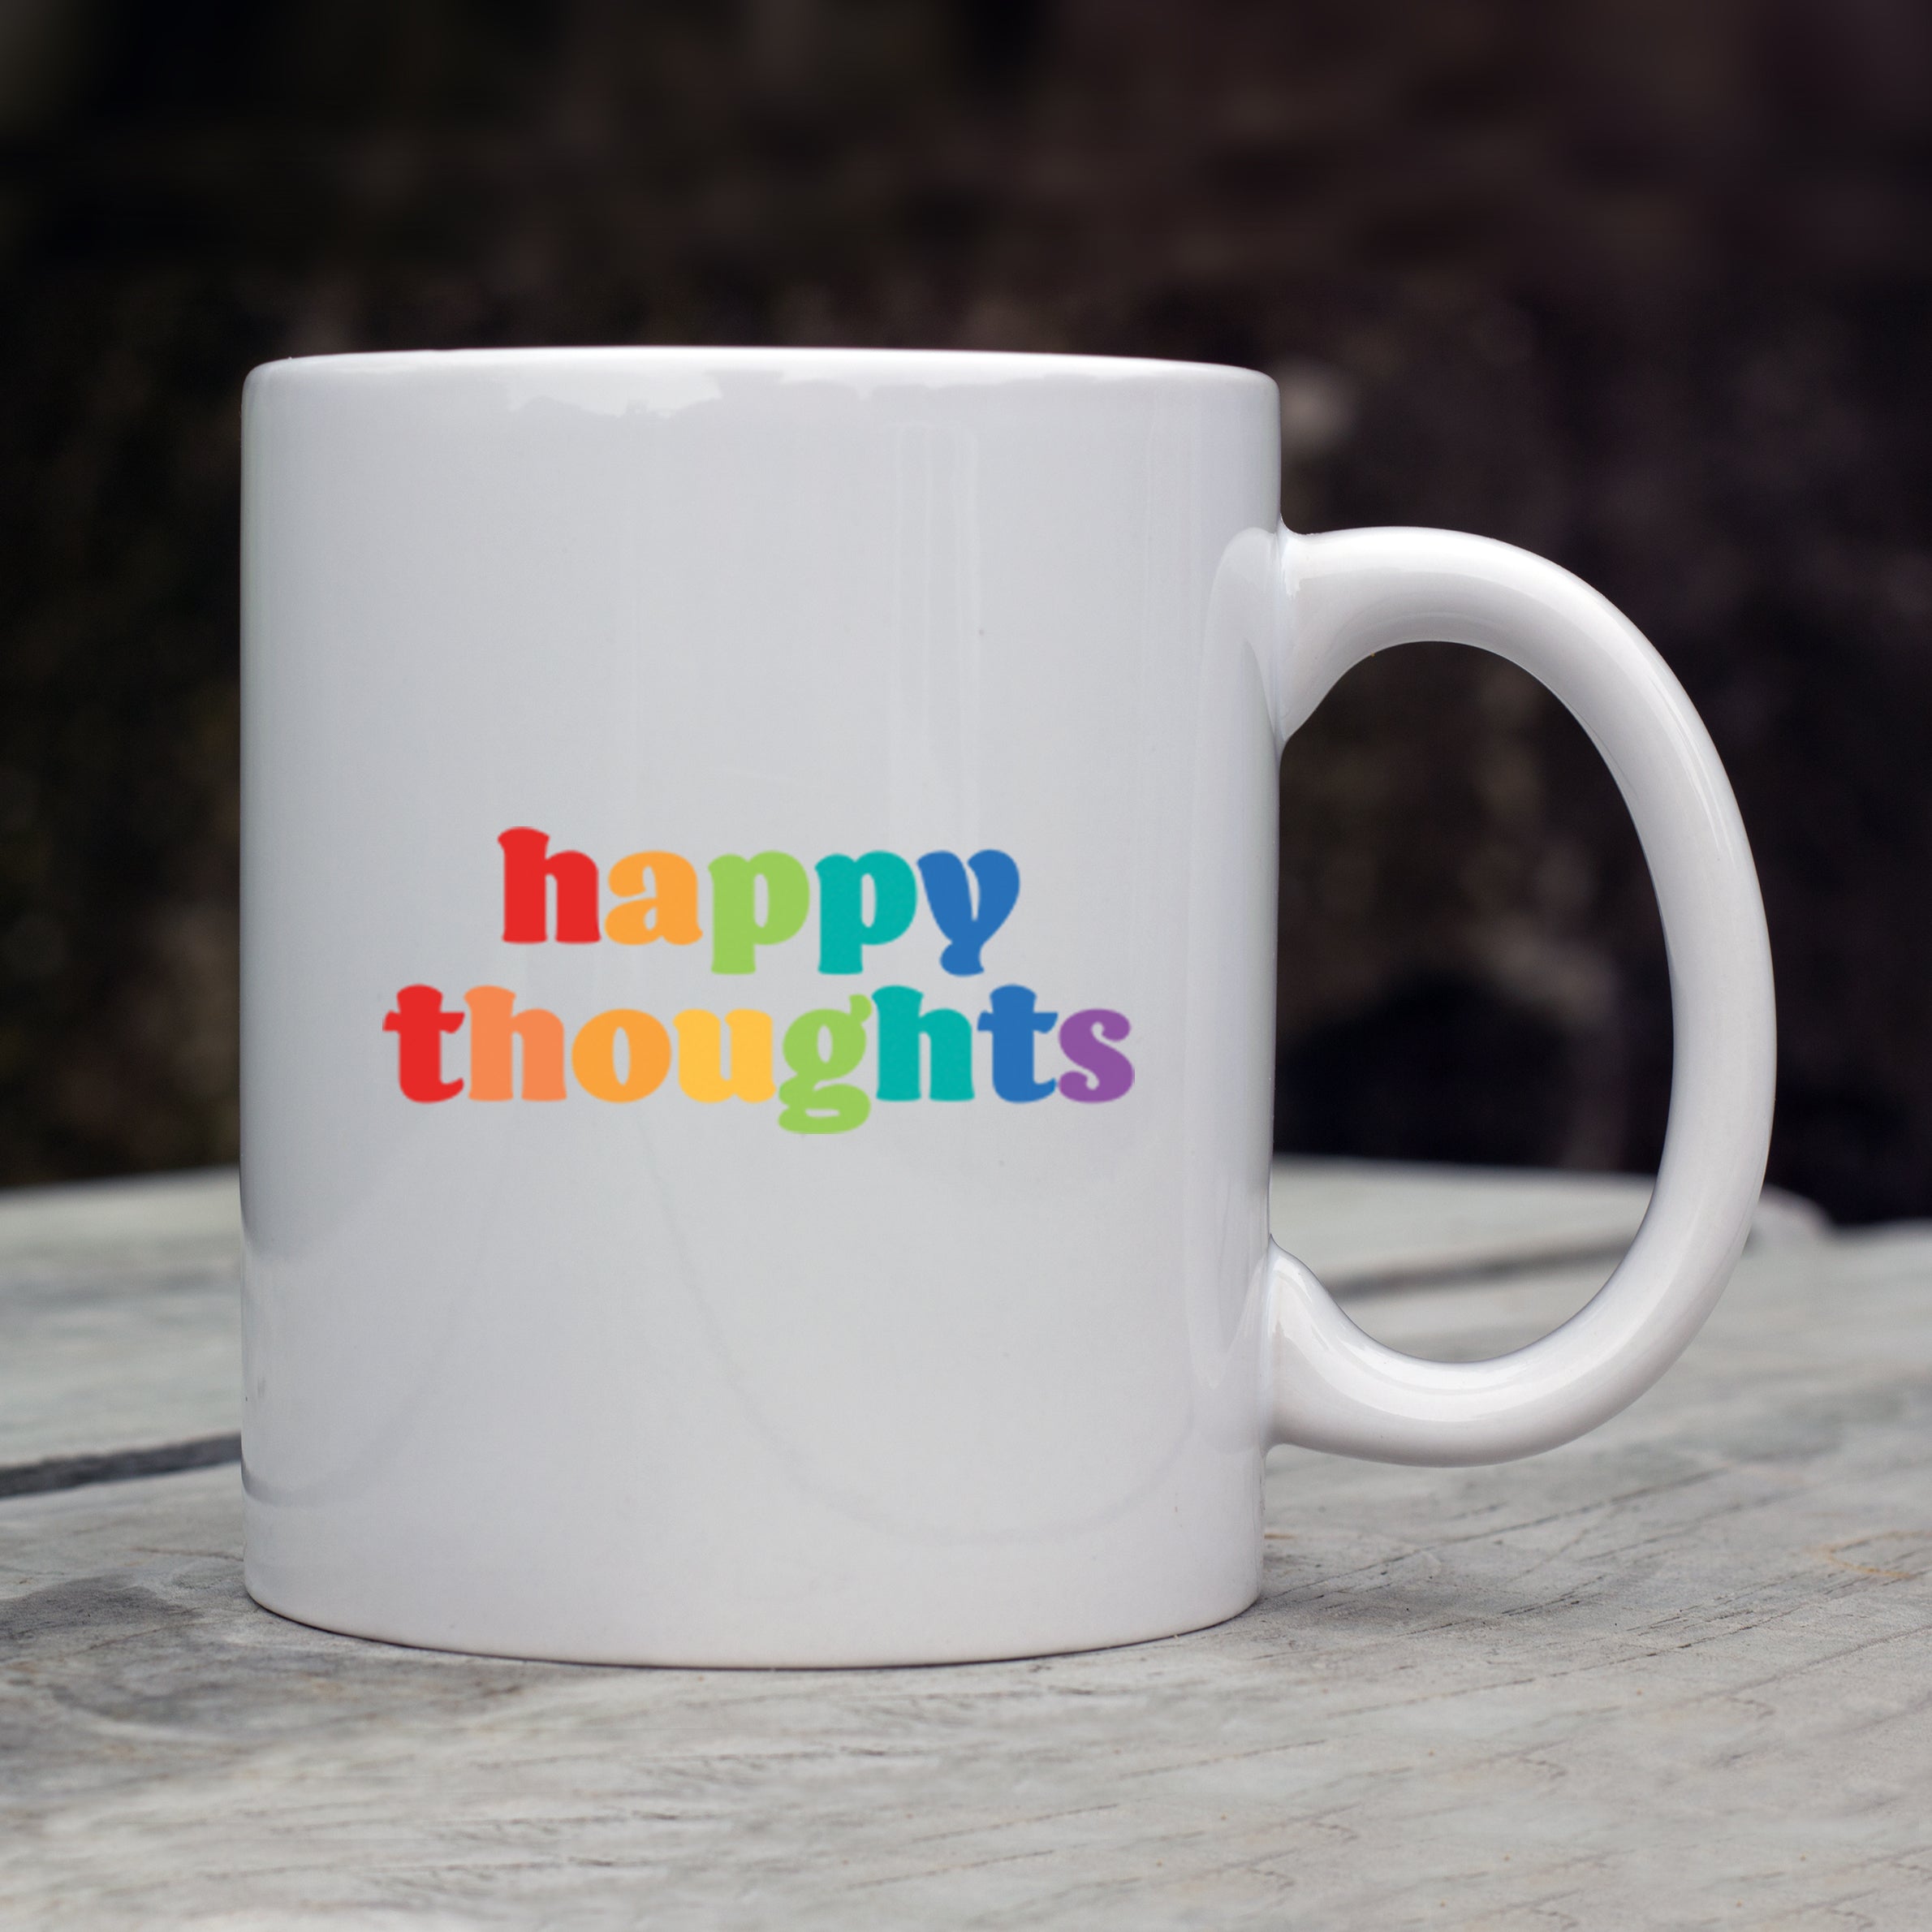 Happy Thoughts Mug